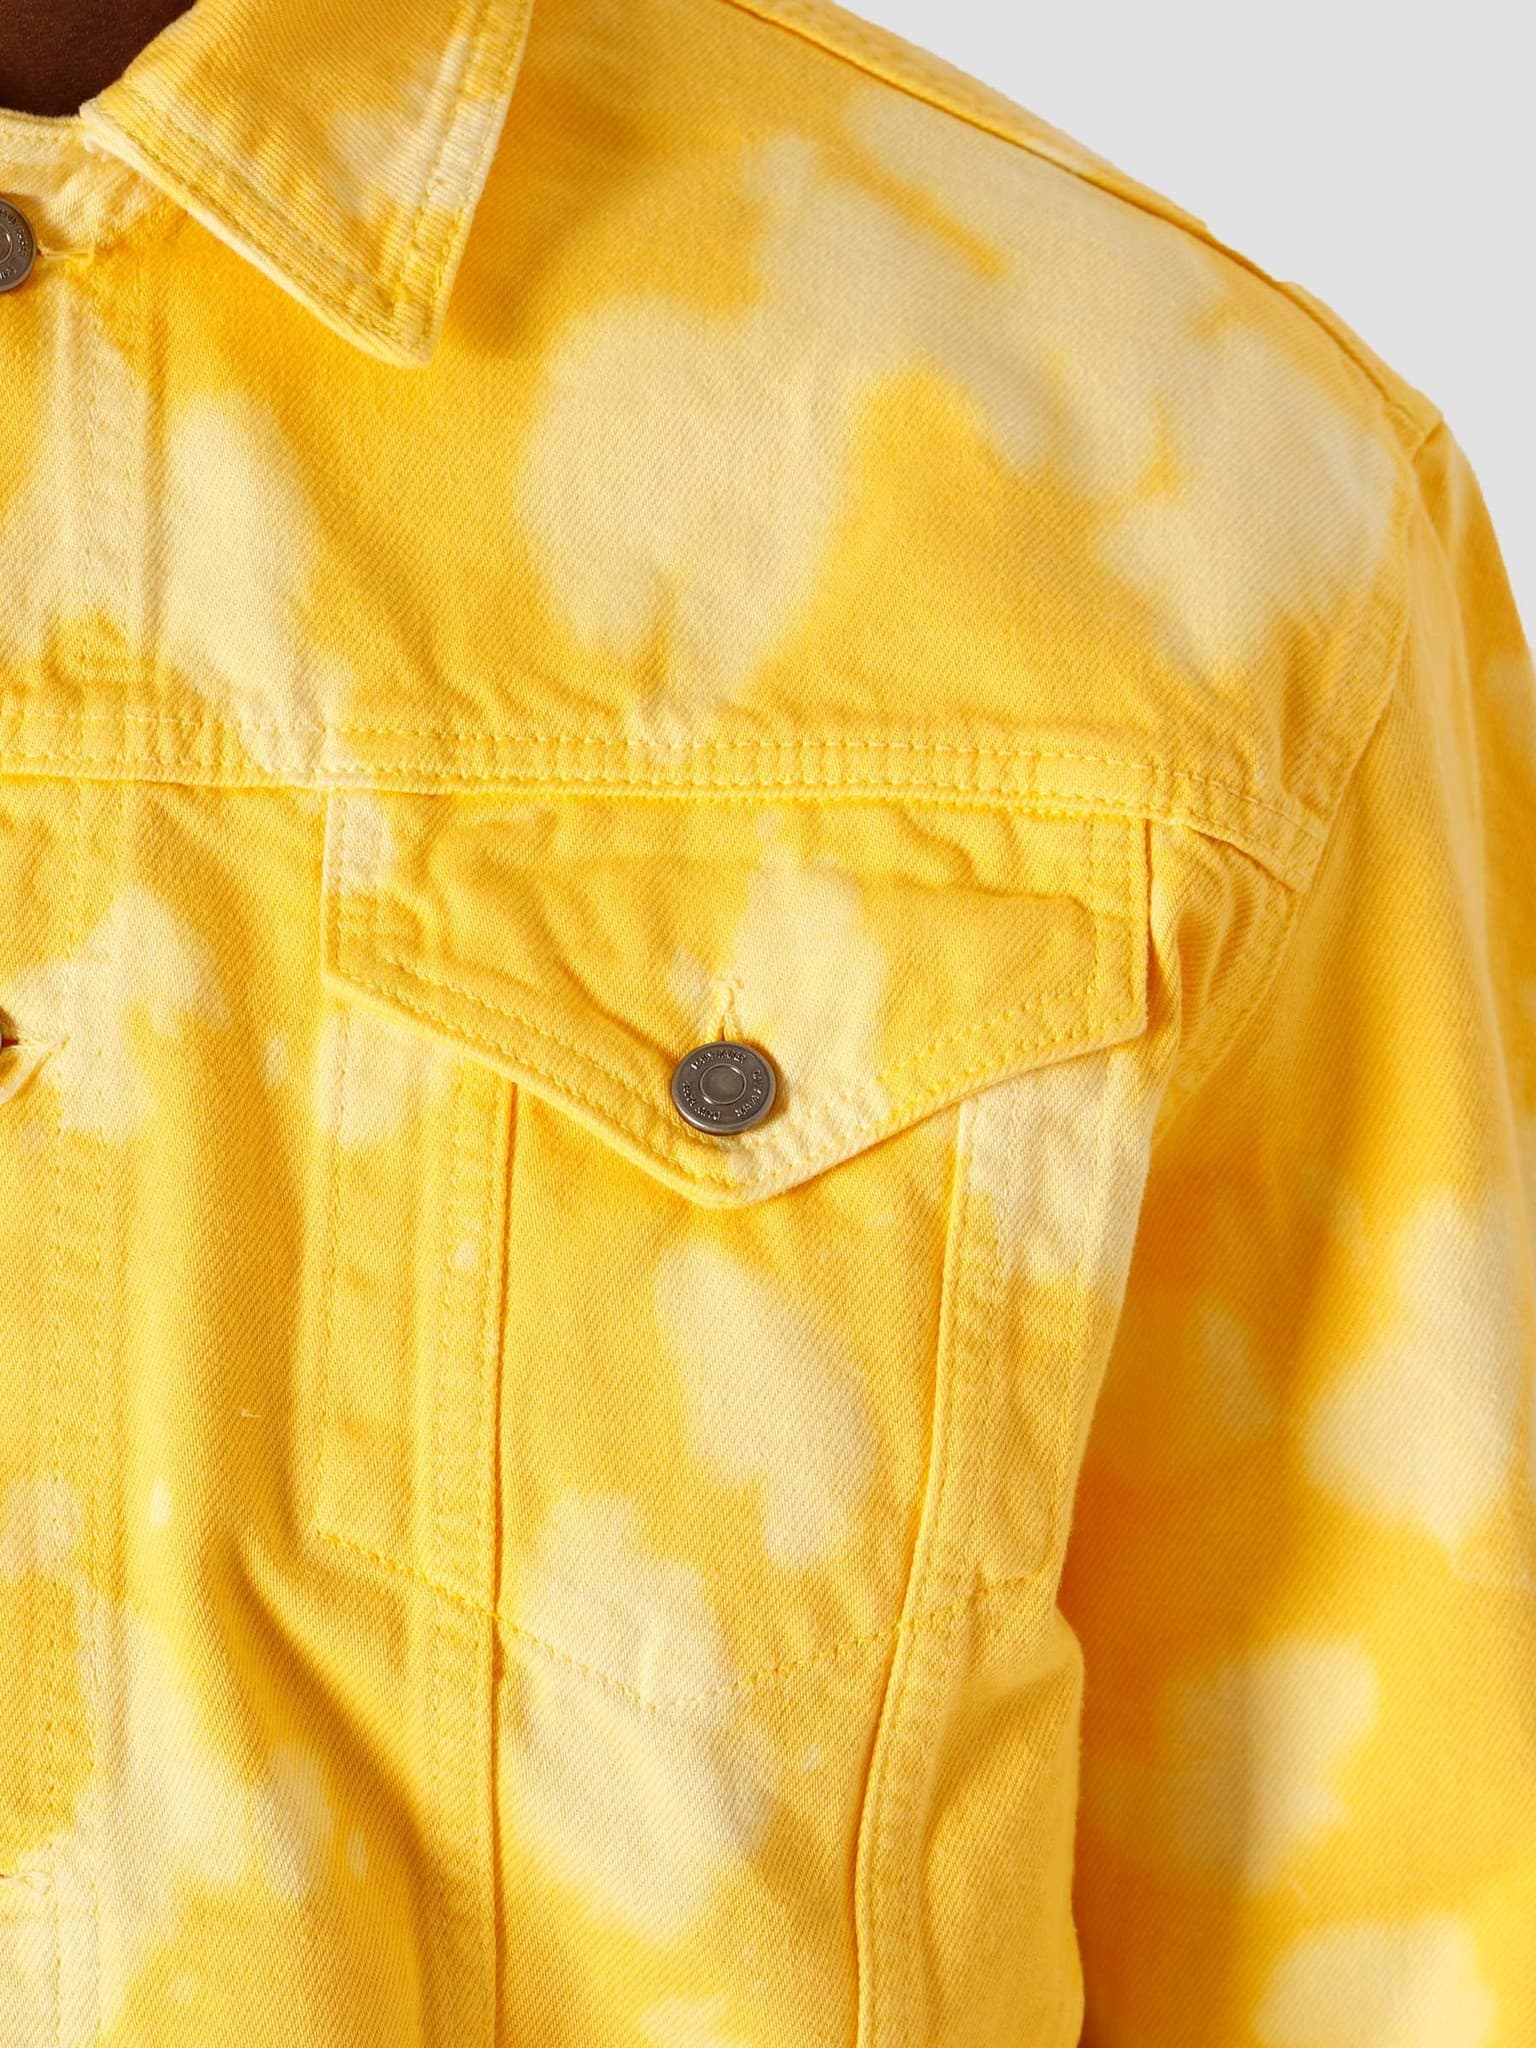 Kardy Jeans Jacket Yellow 2111171